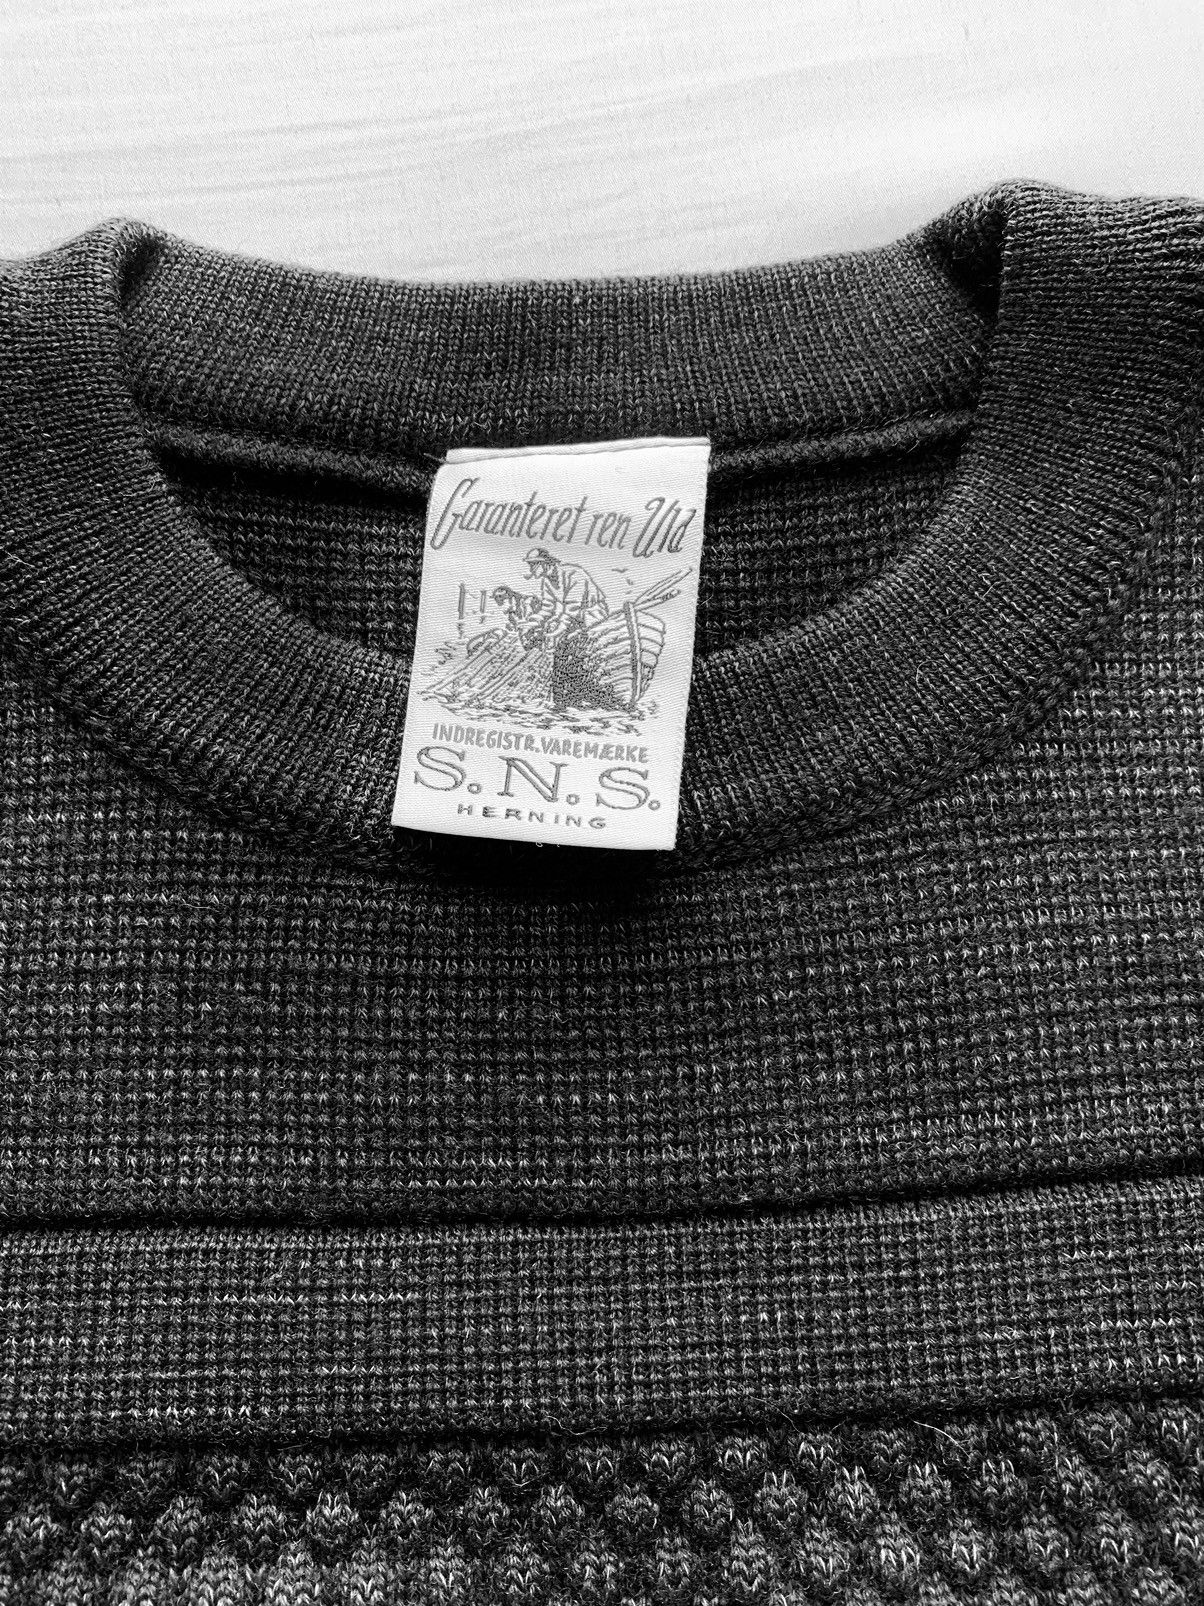 S.N.S. Herning S.N.S. HERNING Textured Virgin Wool Sweater midnight blue M Size US M / EU 48-50 / 2 - 4 Thumbnail